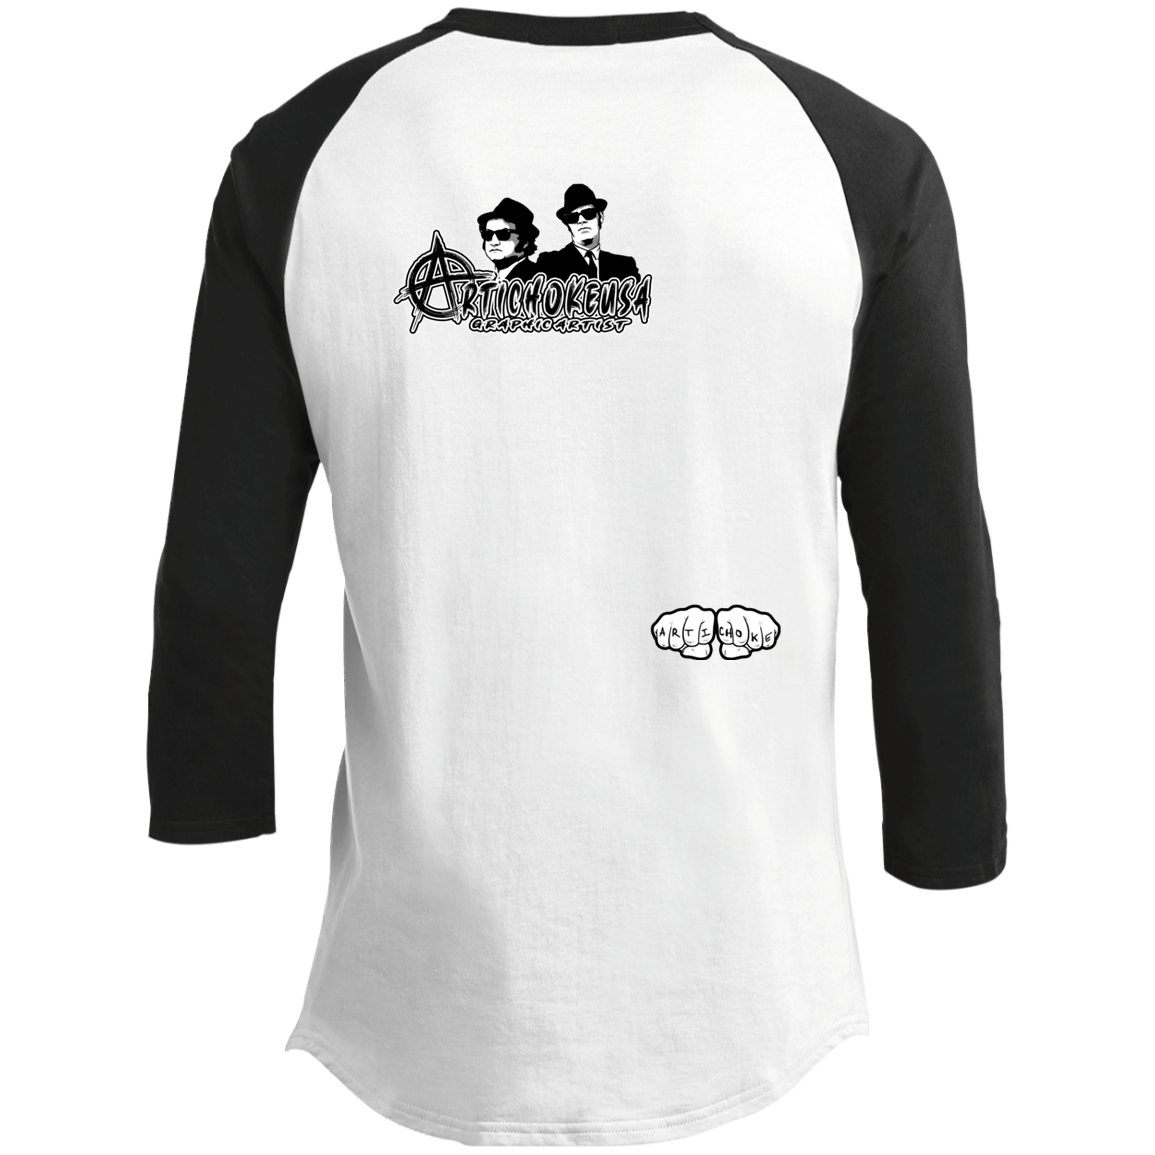 ArtichokeUSA Custom Design. The Good Ole Boys. Blues Brothers Fan Art. Men's 3/4 Raglan Sleeve Shirt